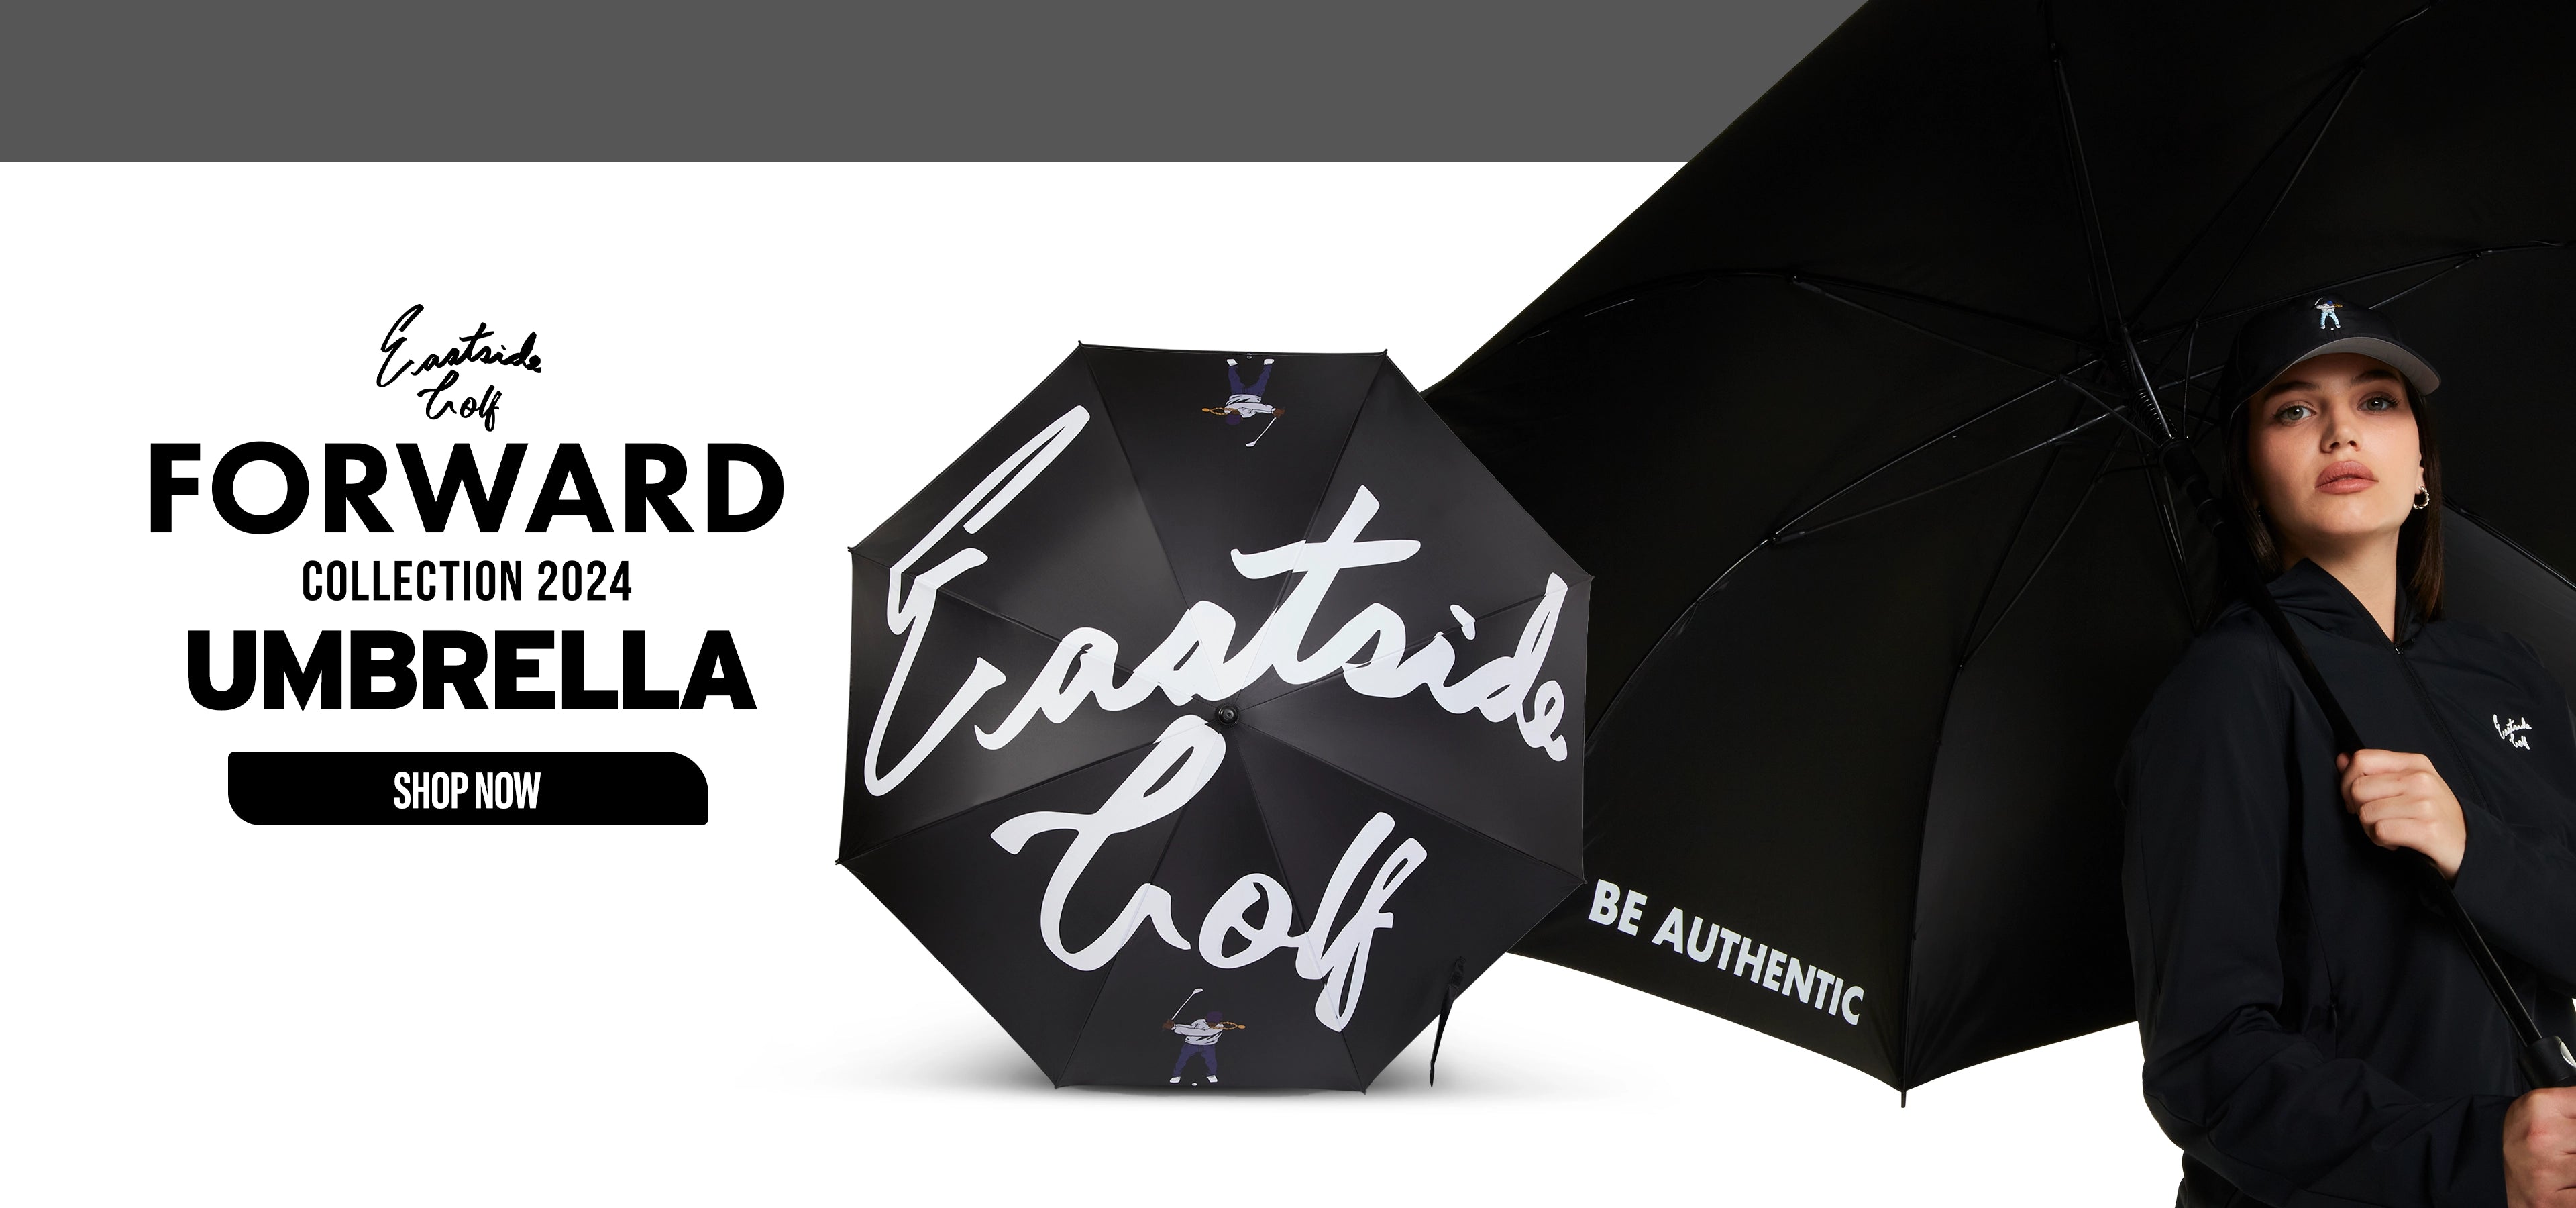 Eastside Golf. Forward Collection 2024 Umbrella. Click to shop now.